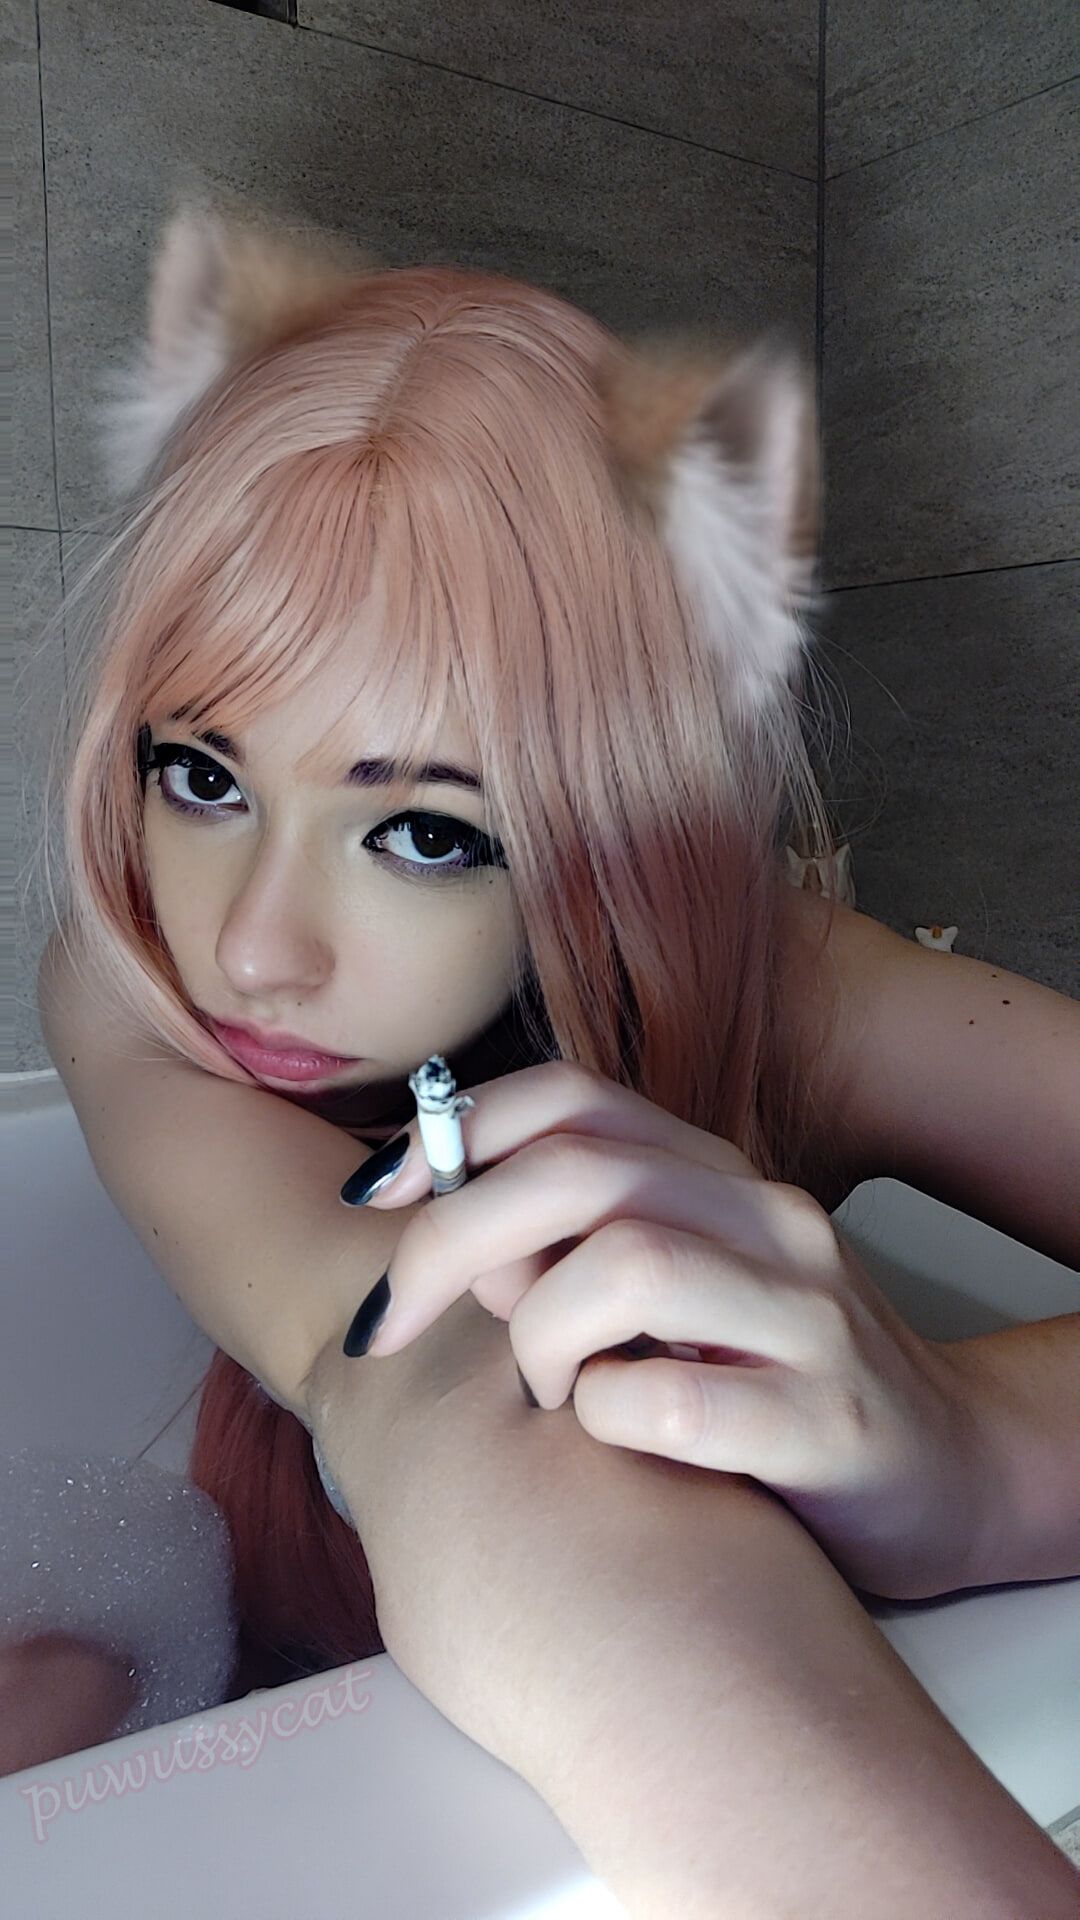 Egirl smoking in bathtub with bubbles #8